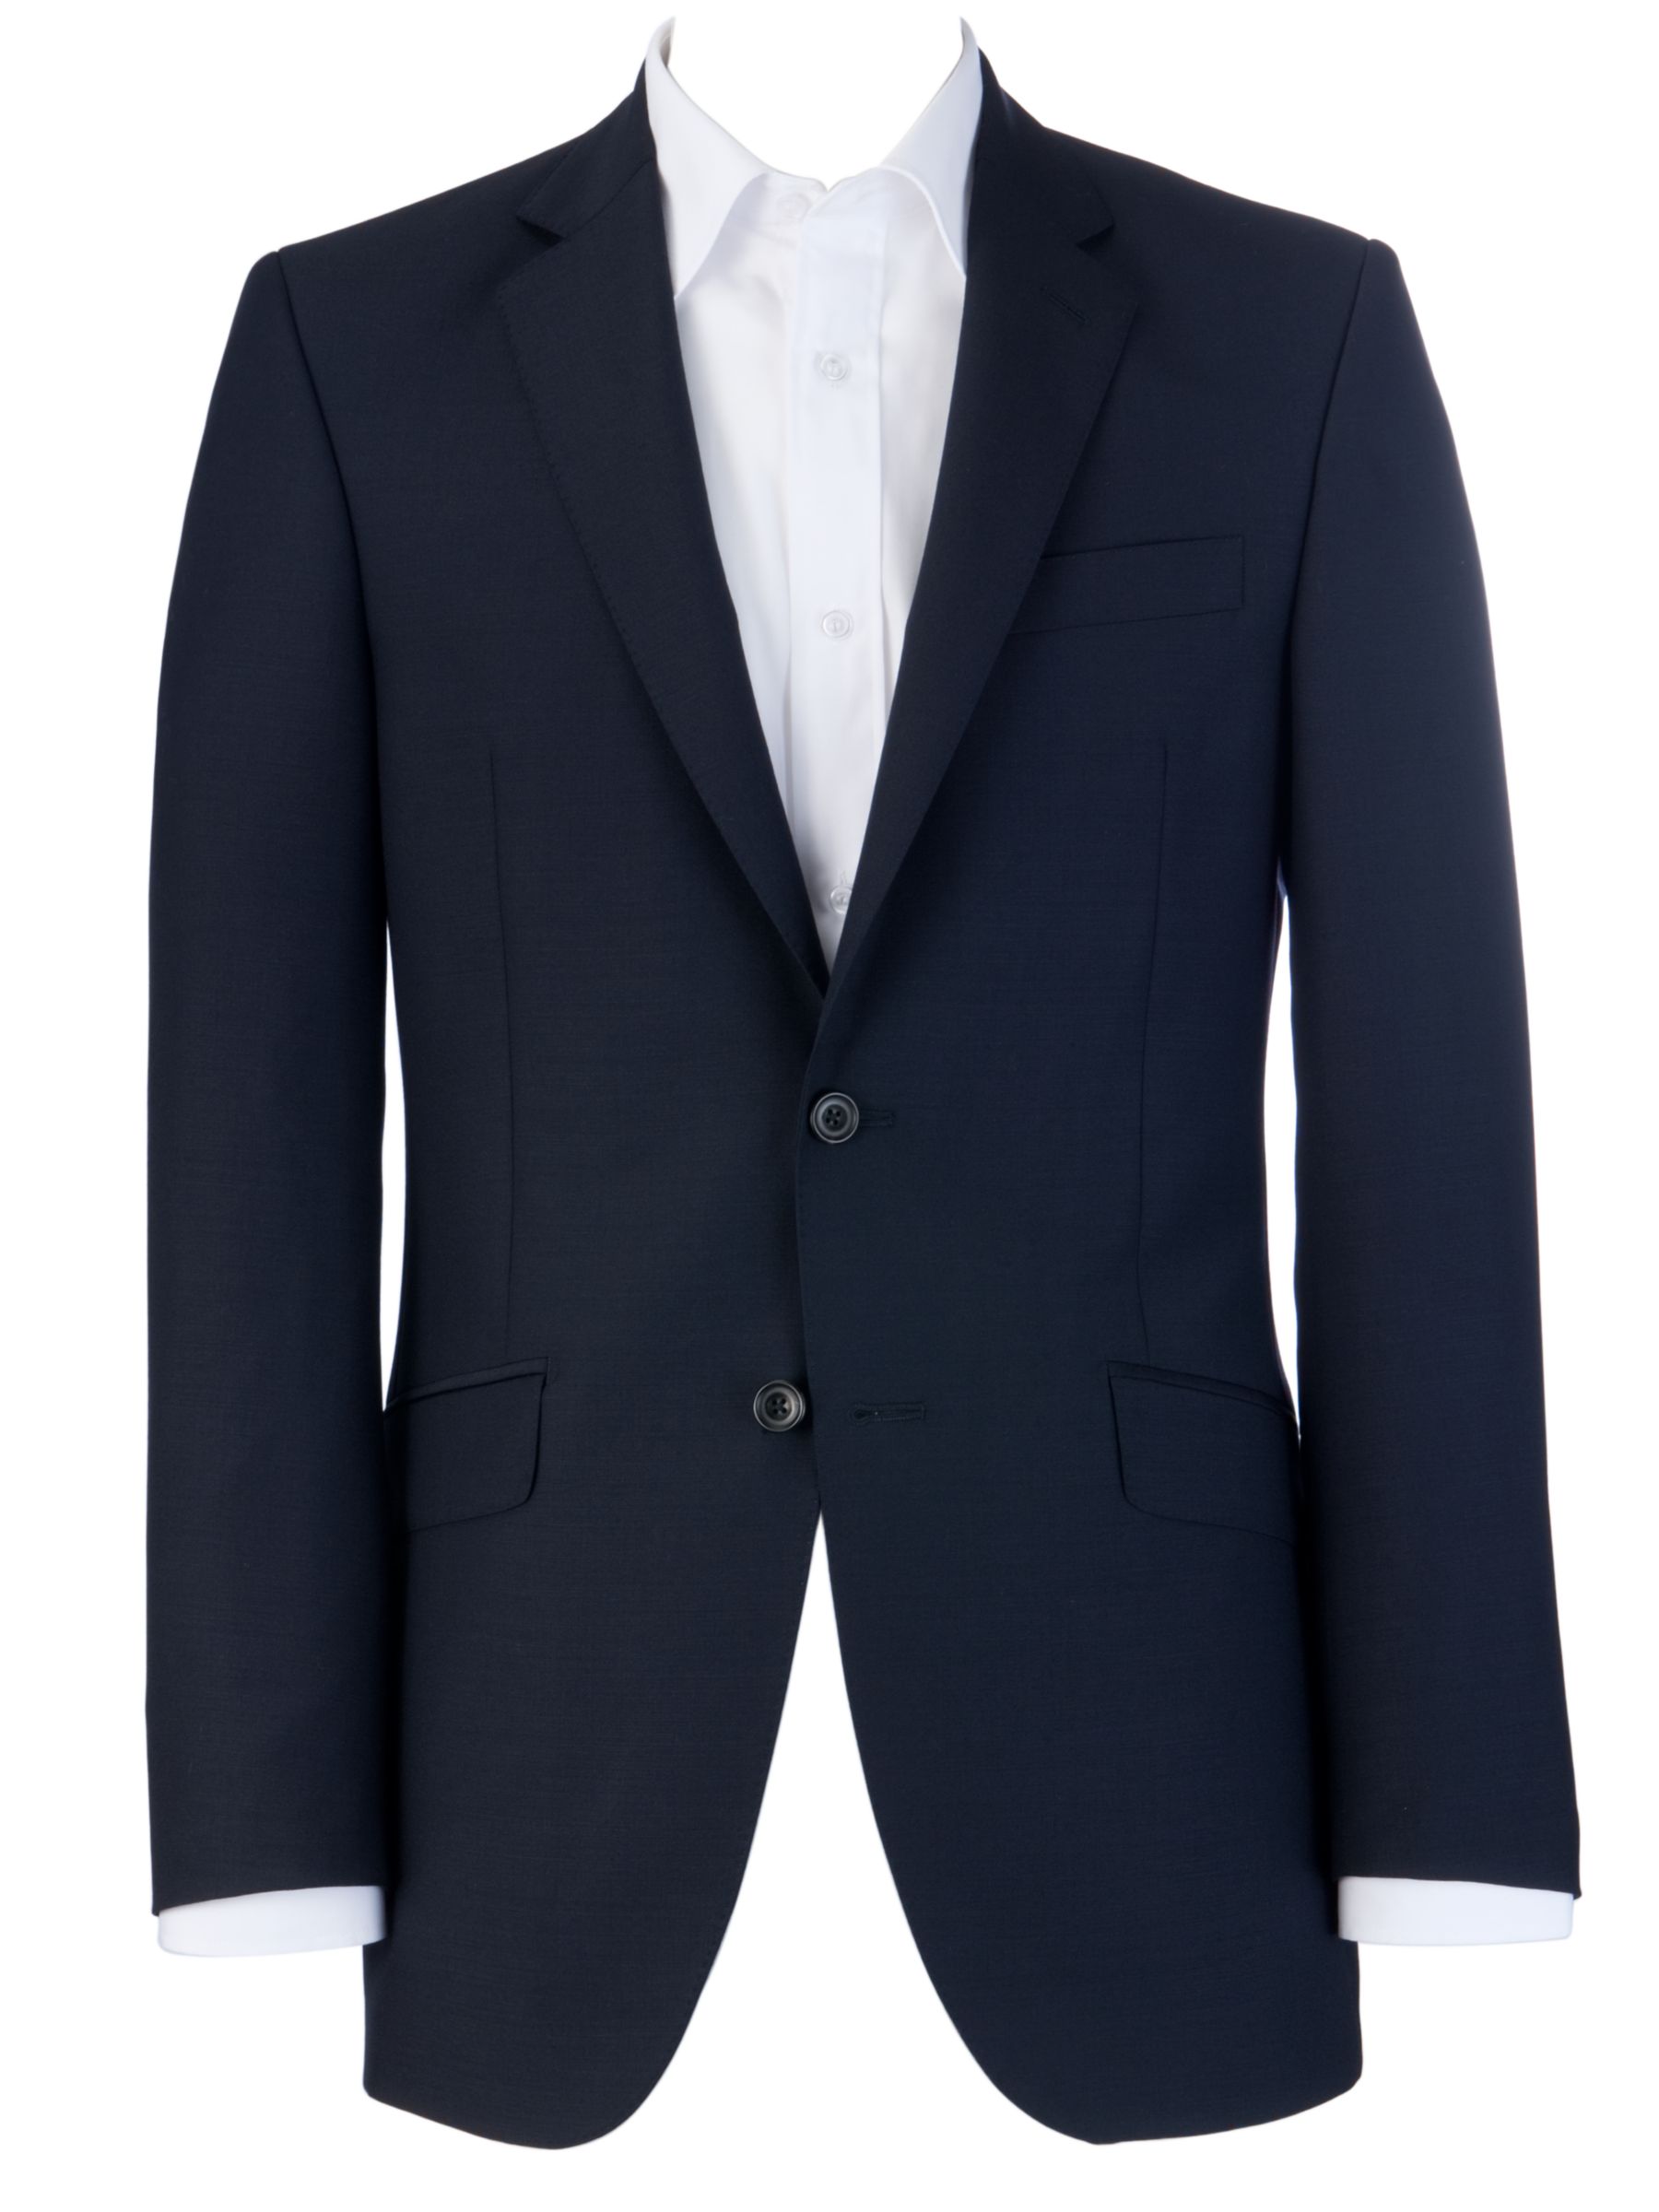 Mayfair Richard James Wool Mohair Suit Jacket, Blue at JohnLewis